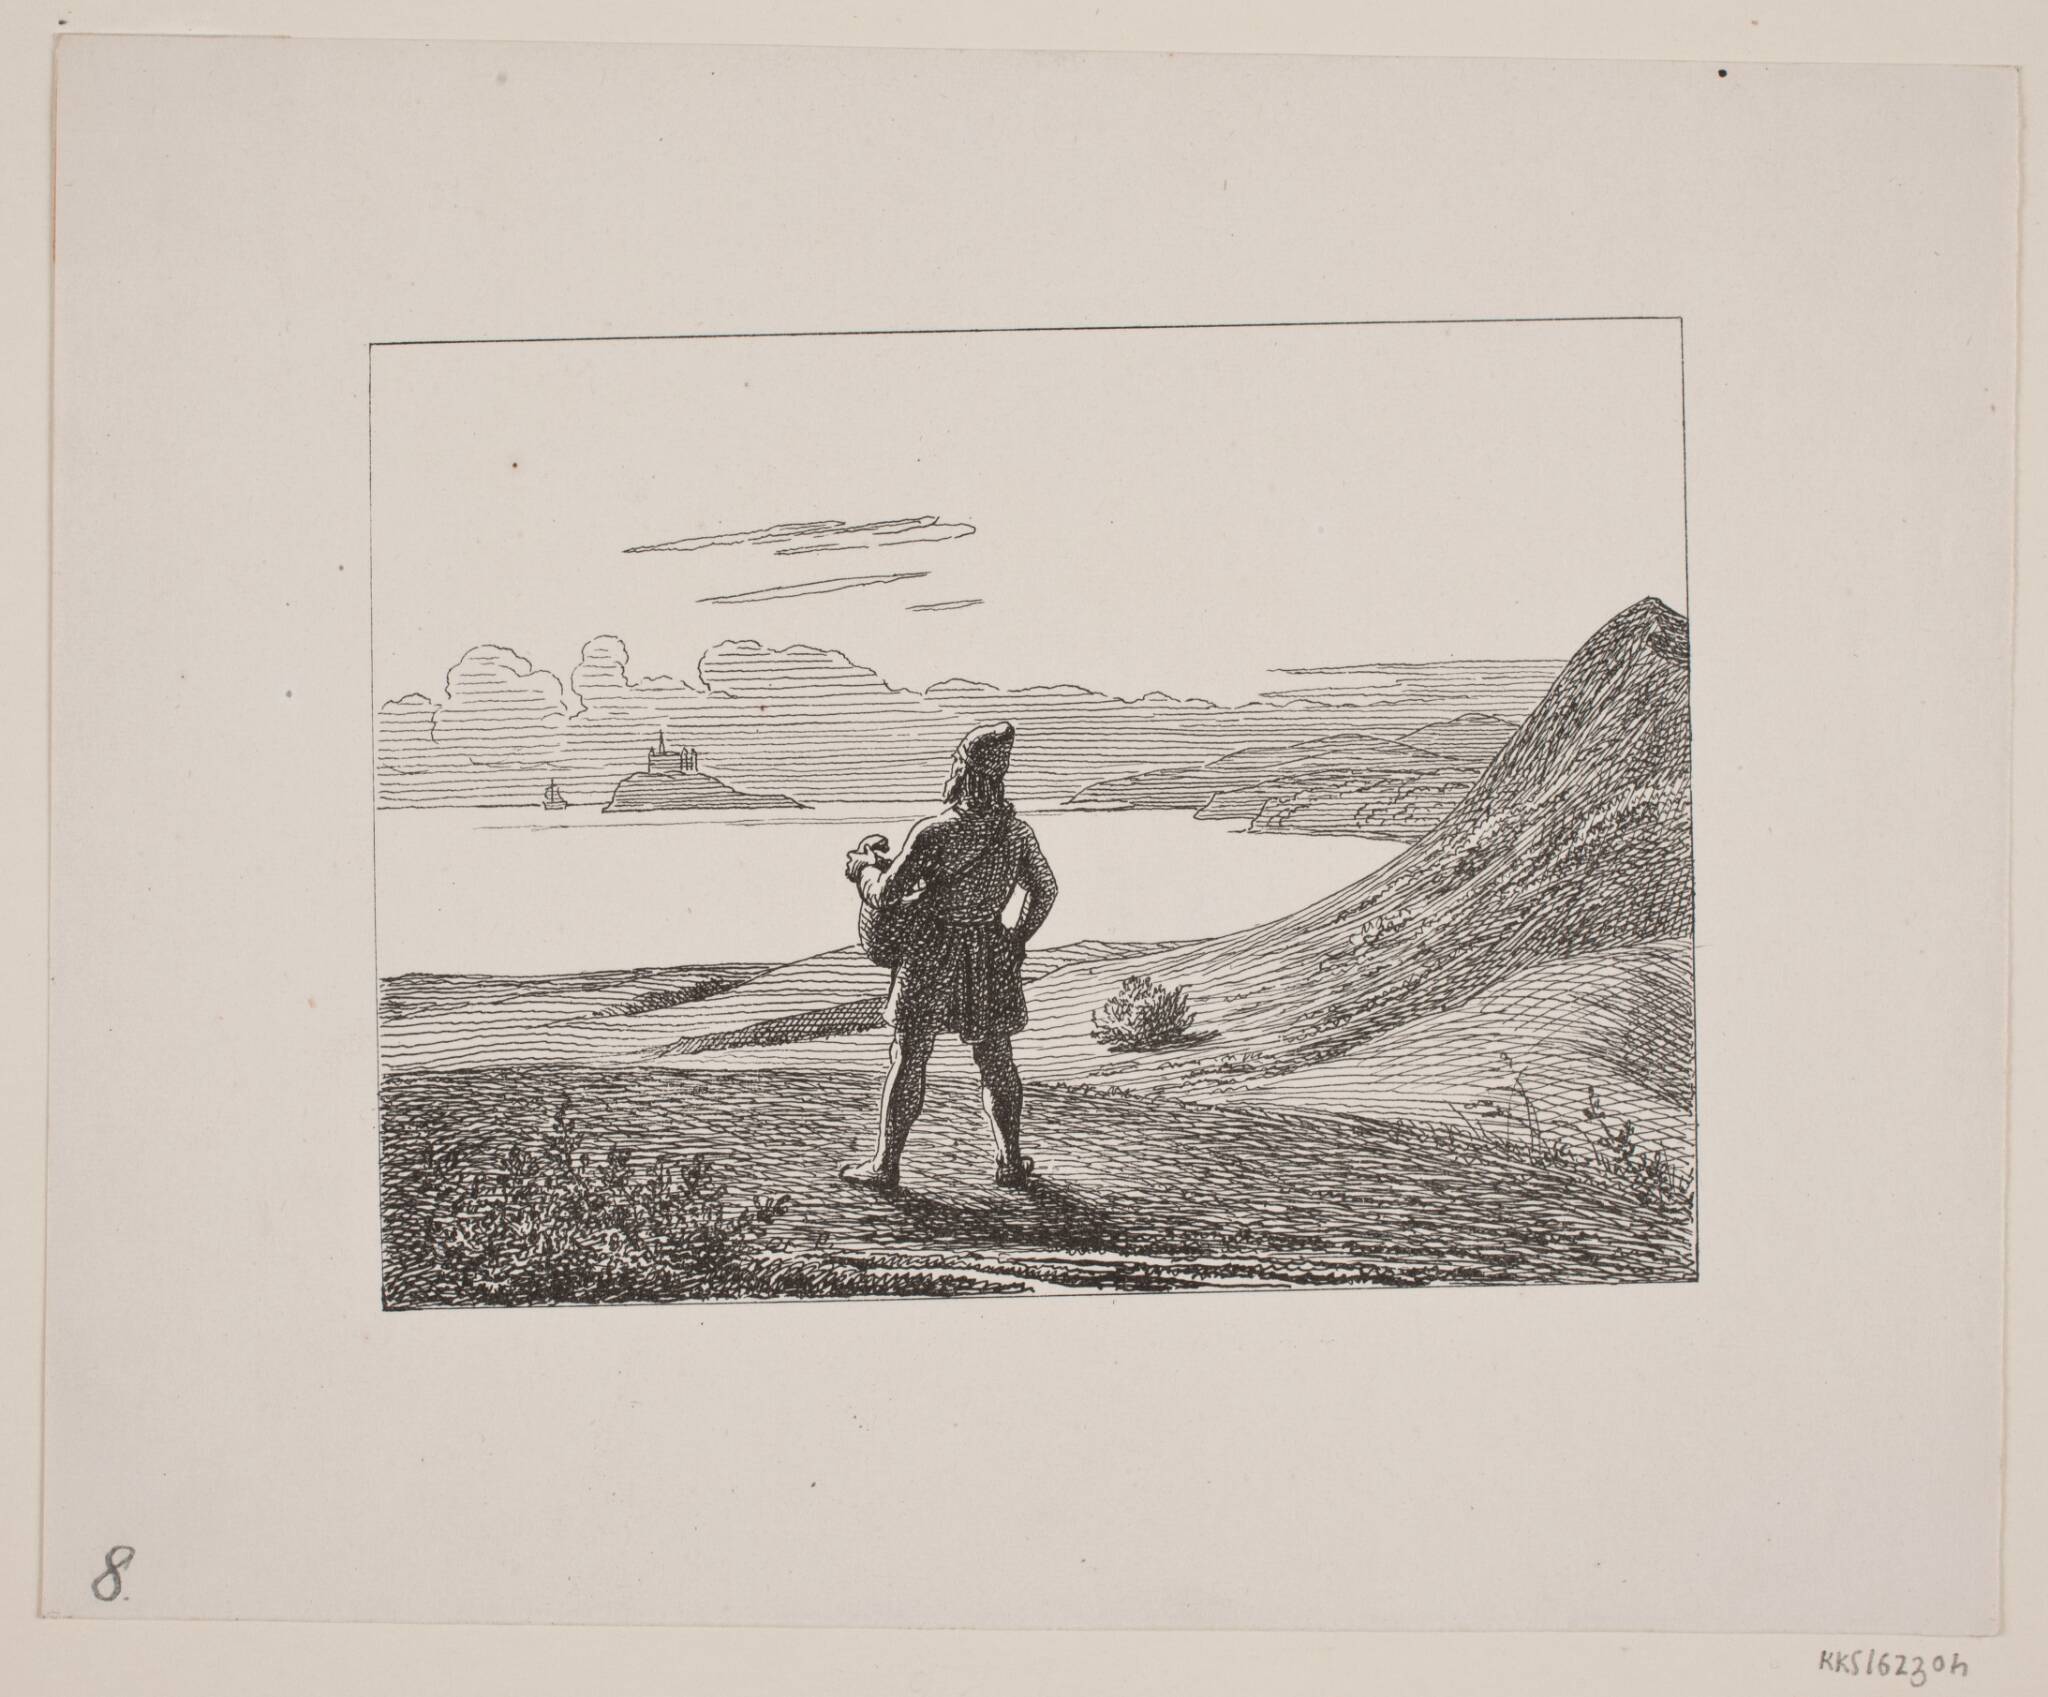 til Svend Grundtvig, Stig: Dansk Folkevise Fra 13de Aarhundrede", 1861, Constantin Hansen, Andr. Hansens Lithografiske Institut | SMK Open